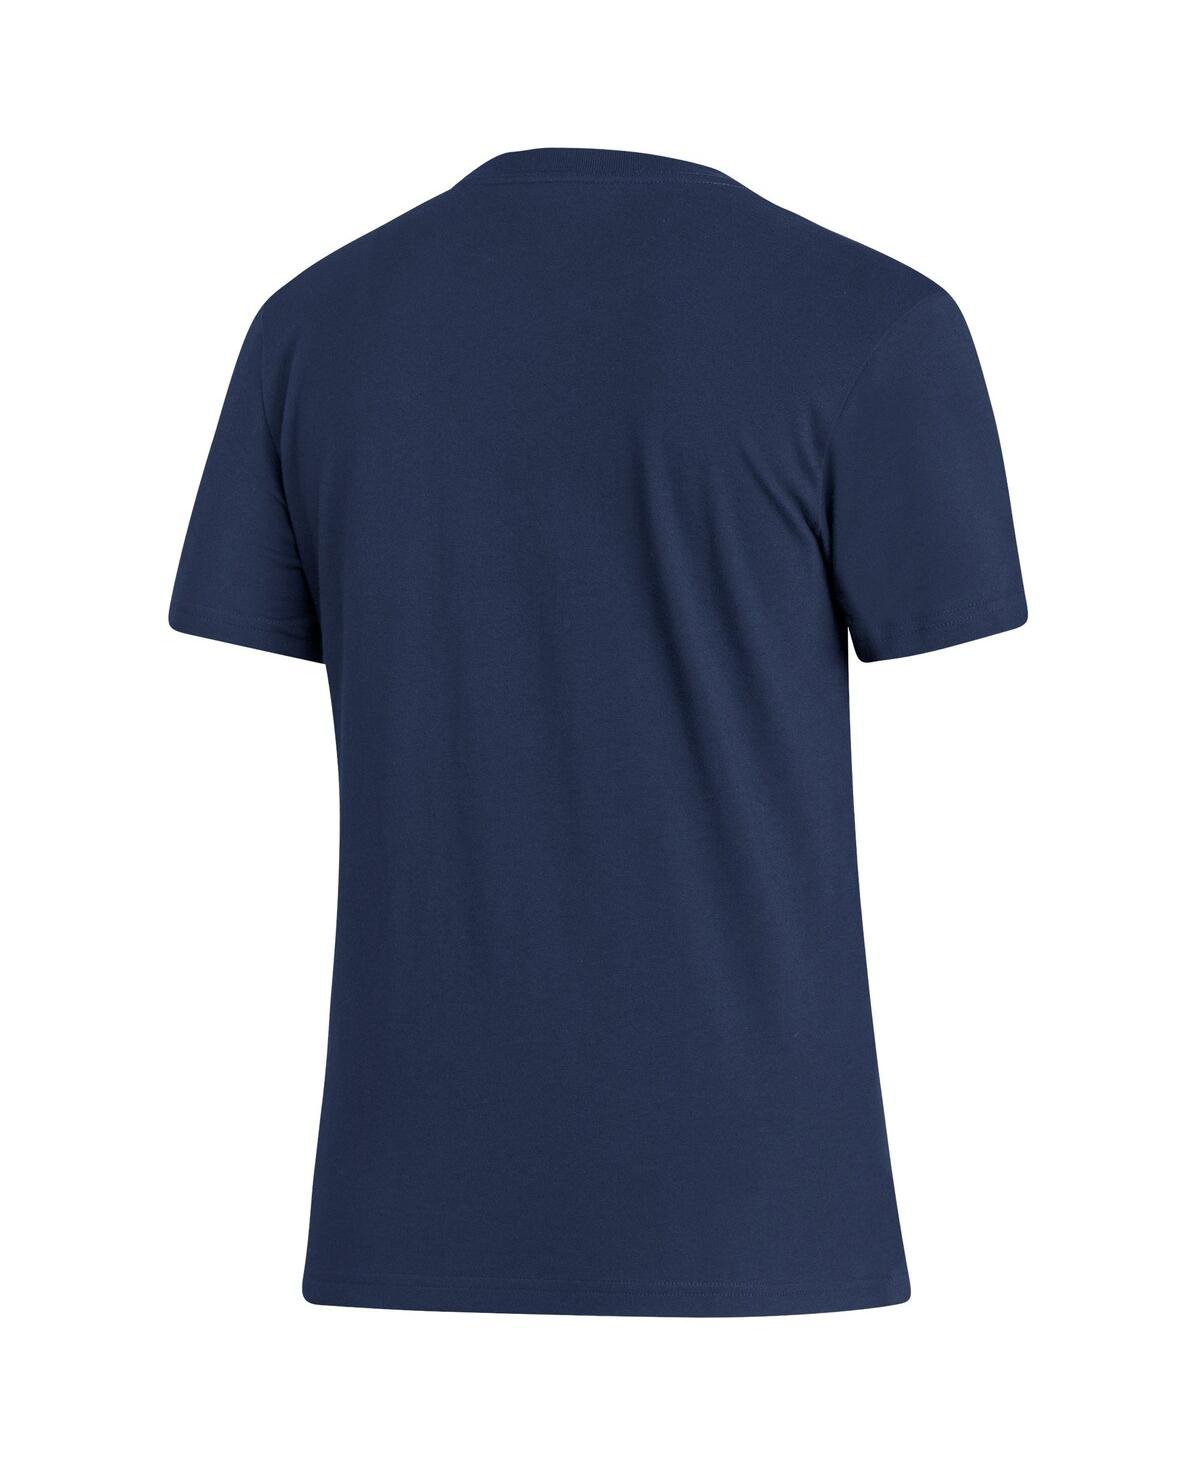 Shop Adidas Originals Women's Adidas Navy New York Islanders Reverse Retro 2.0 Playmaker T-shirt